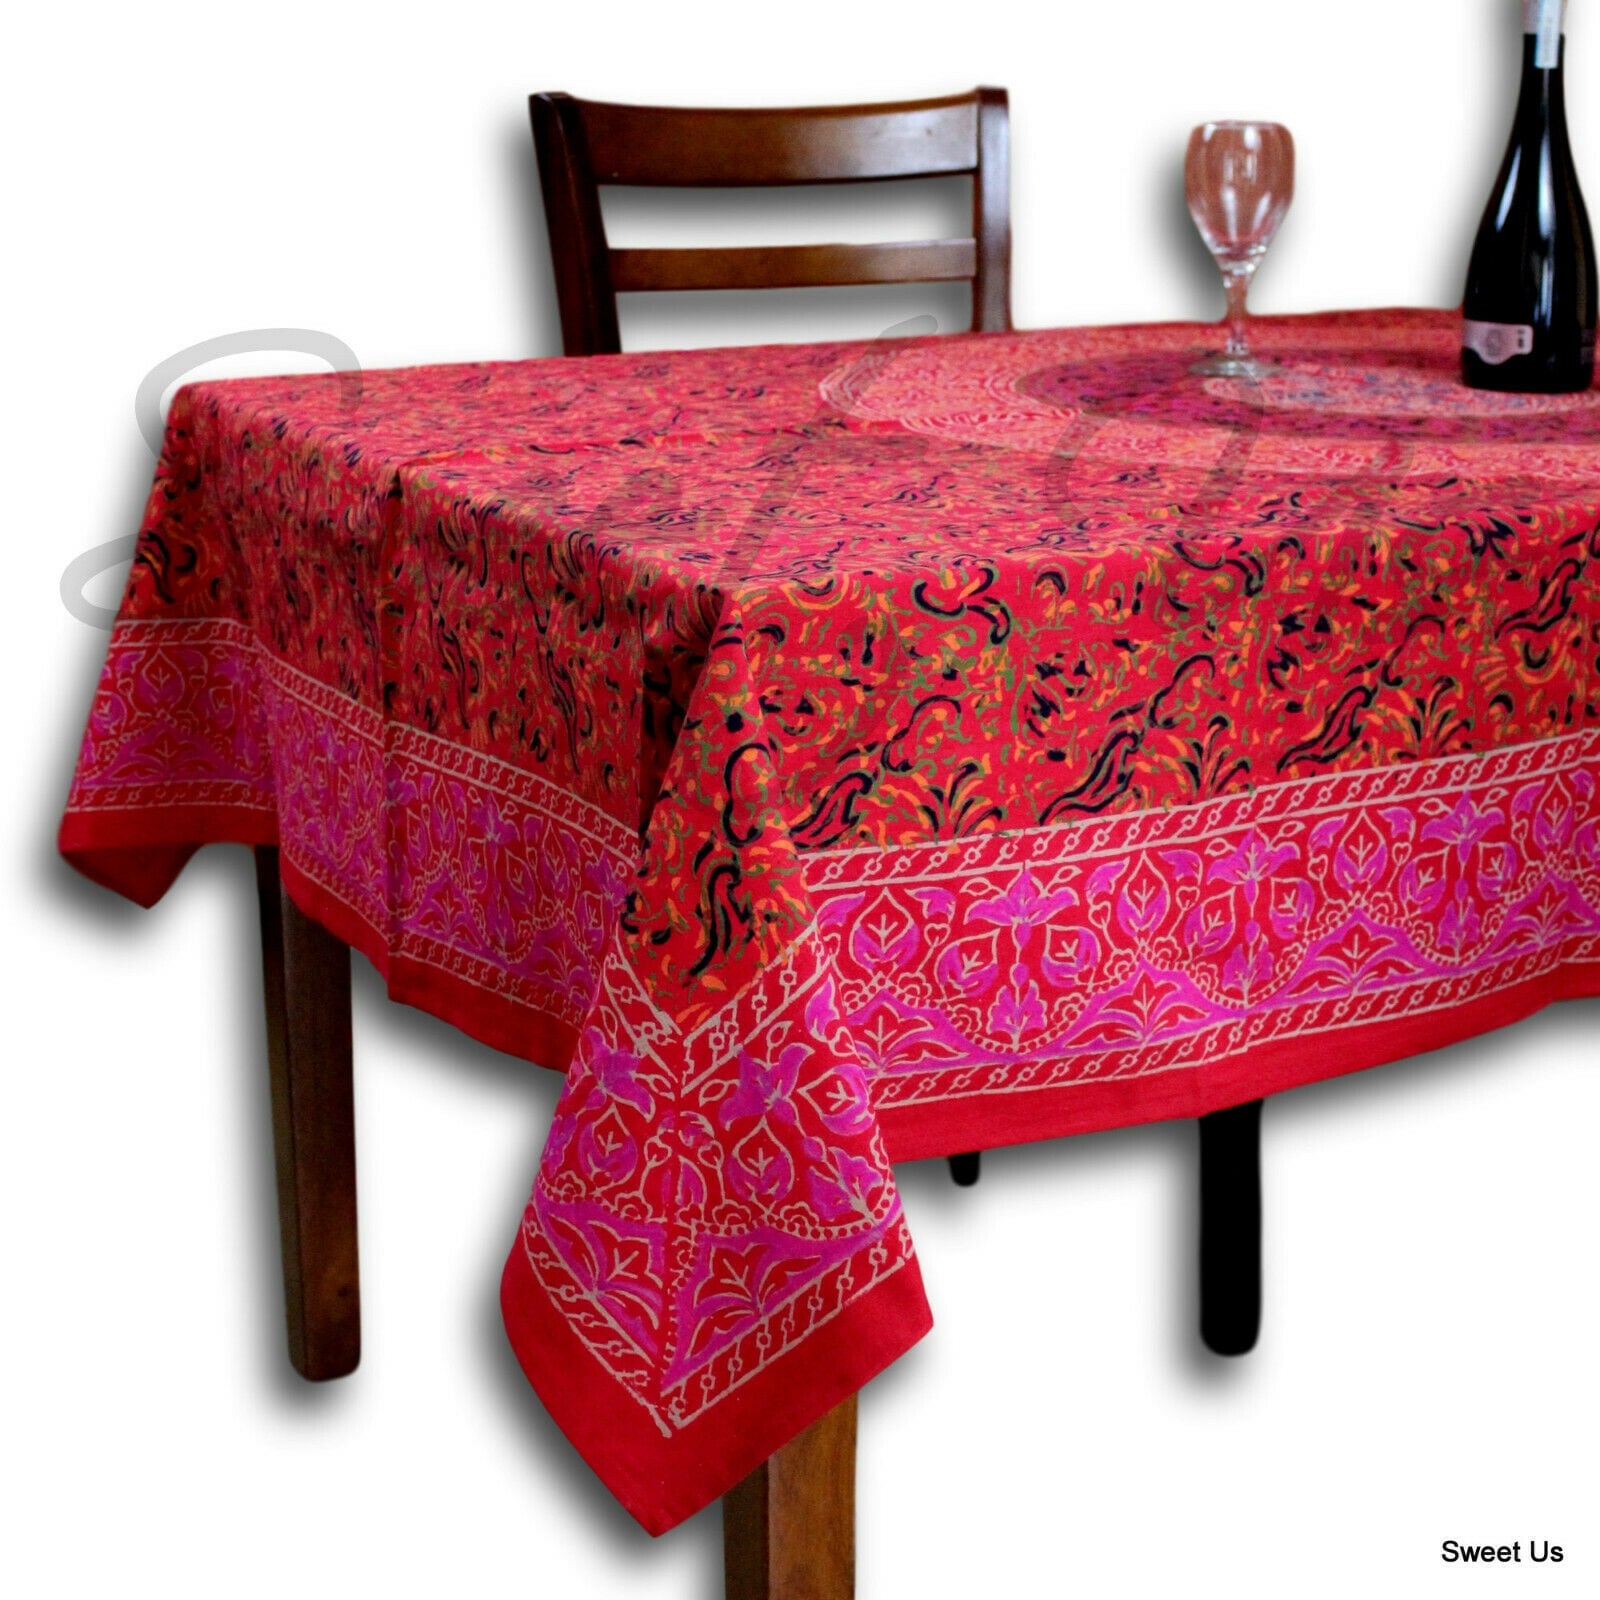 square cloth tablecloths